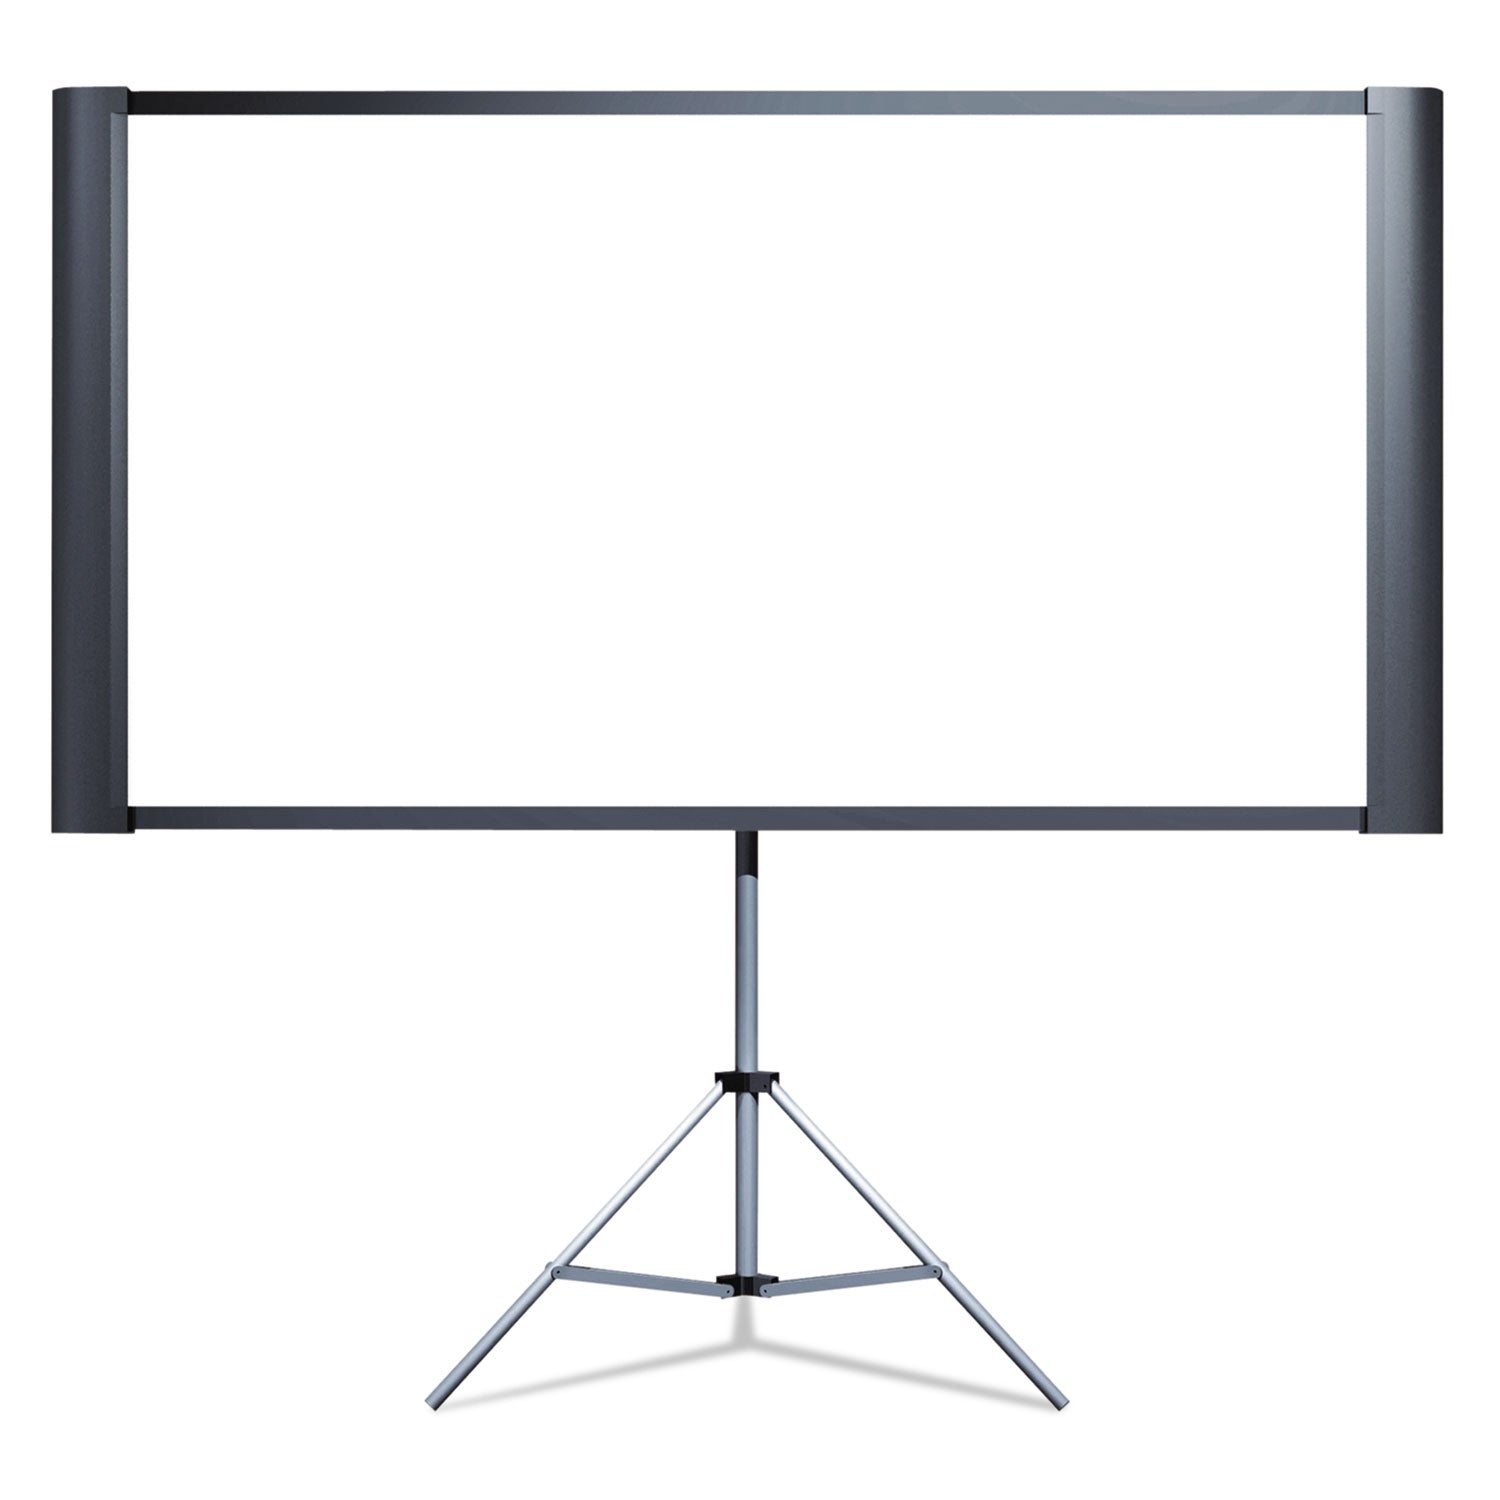 duet-ultra-portable-projection-screen-80-widescreen_epselpsc80 - 1